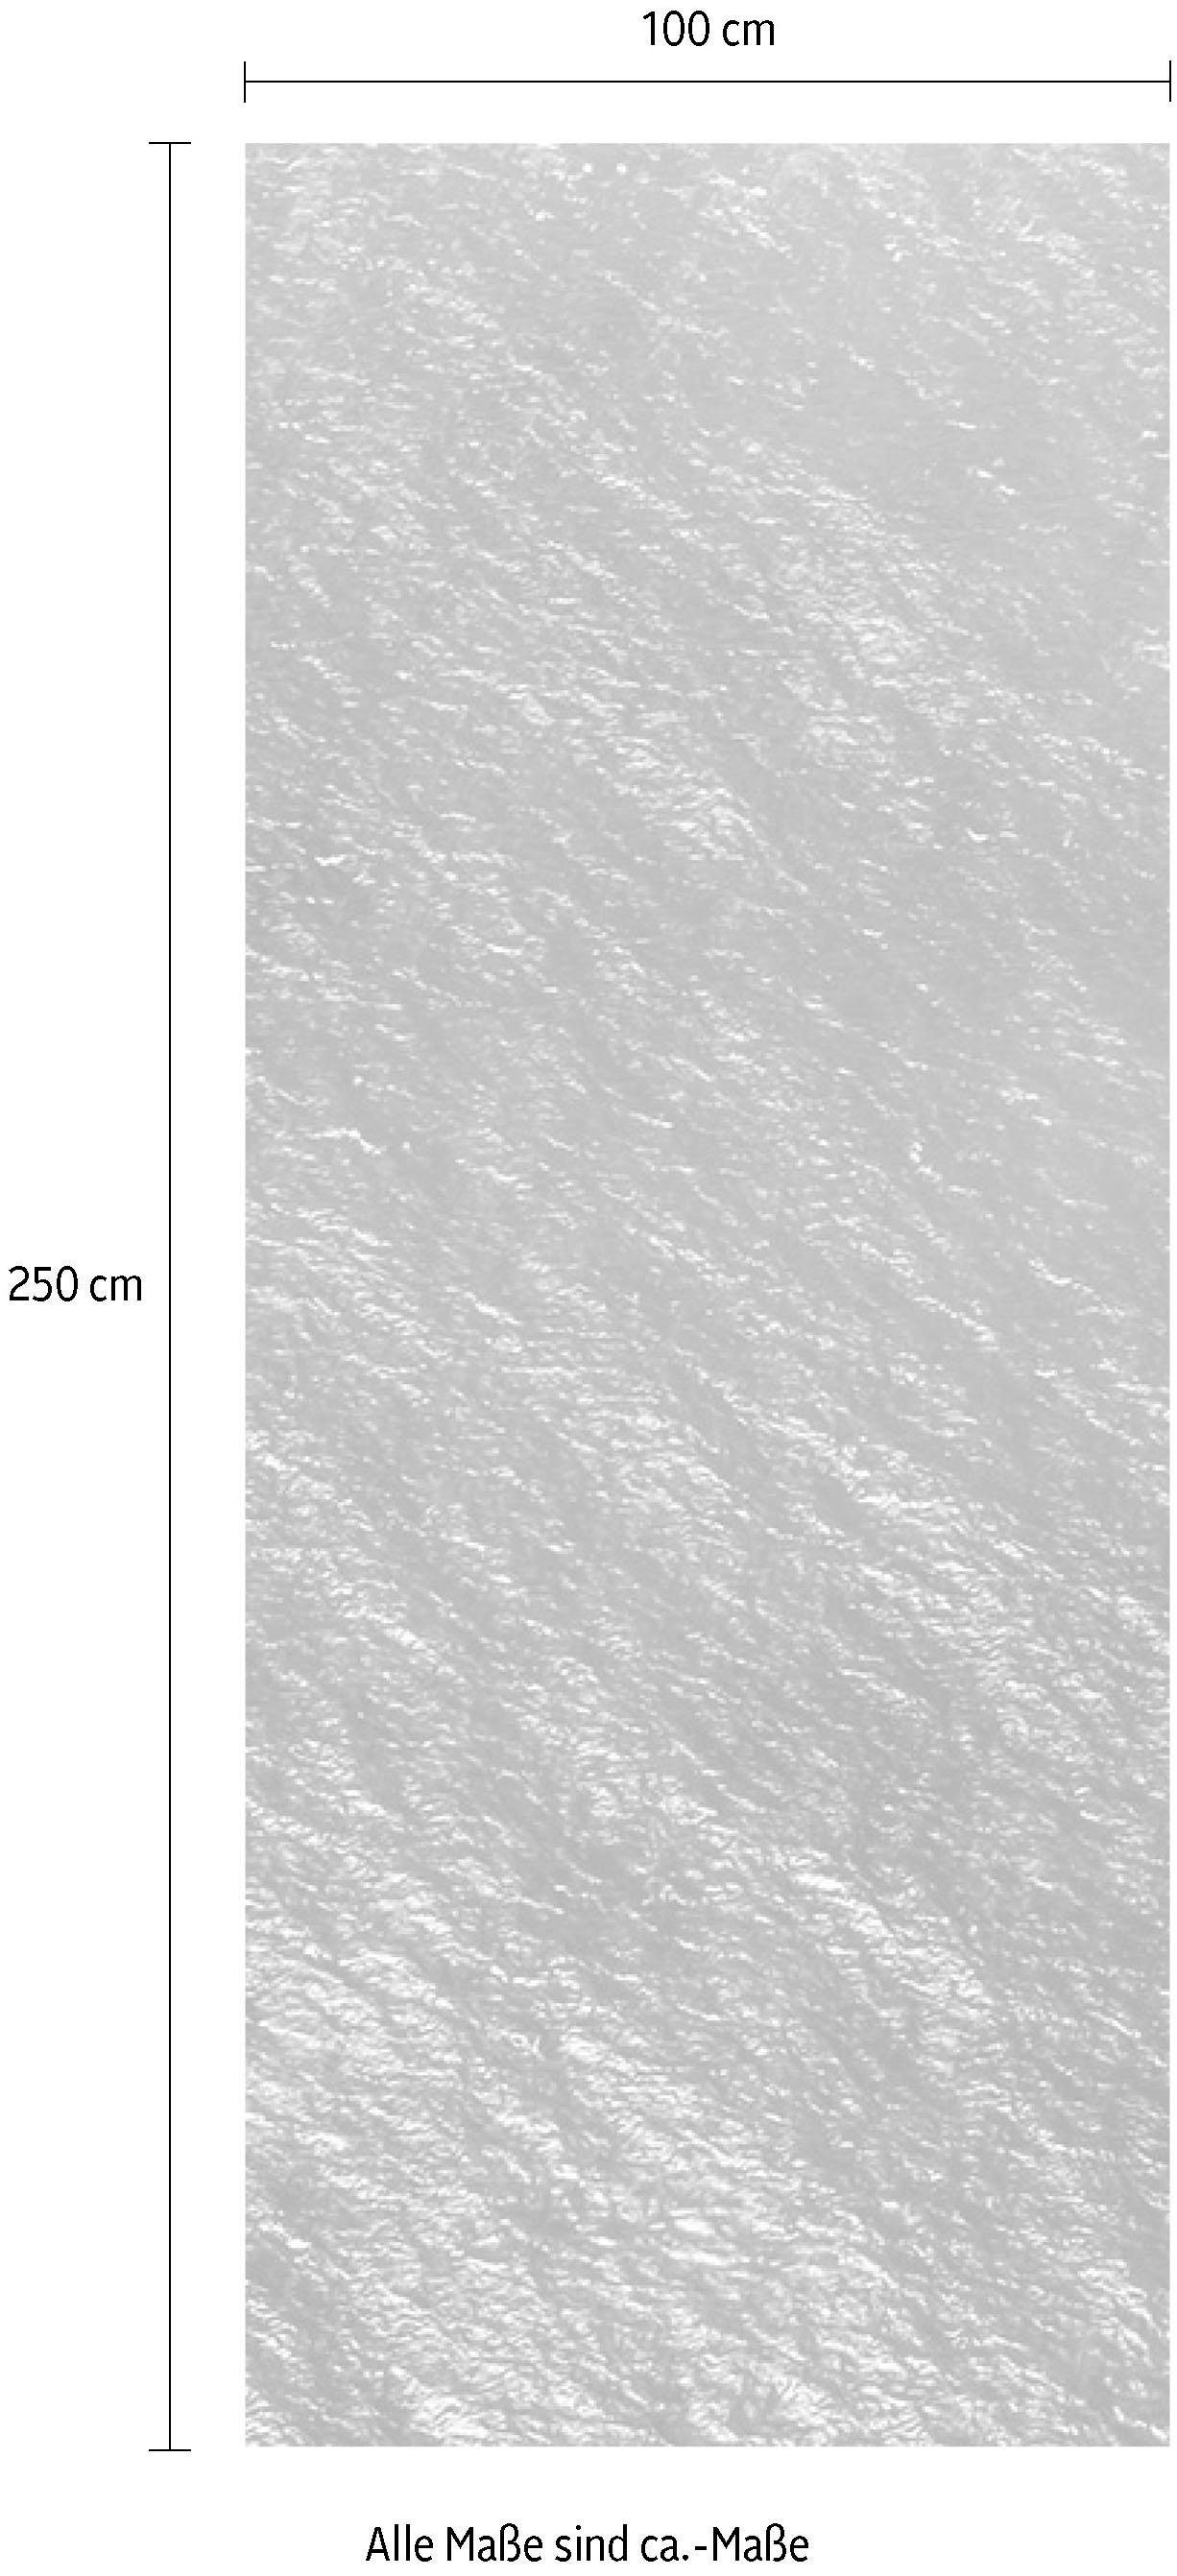 Komar Vliestapete »Blaupause Panel«, 100x250 cm (Breite x Höhe), Vliestapete, 100 cm Bahnbreite